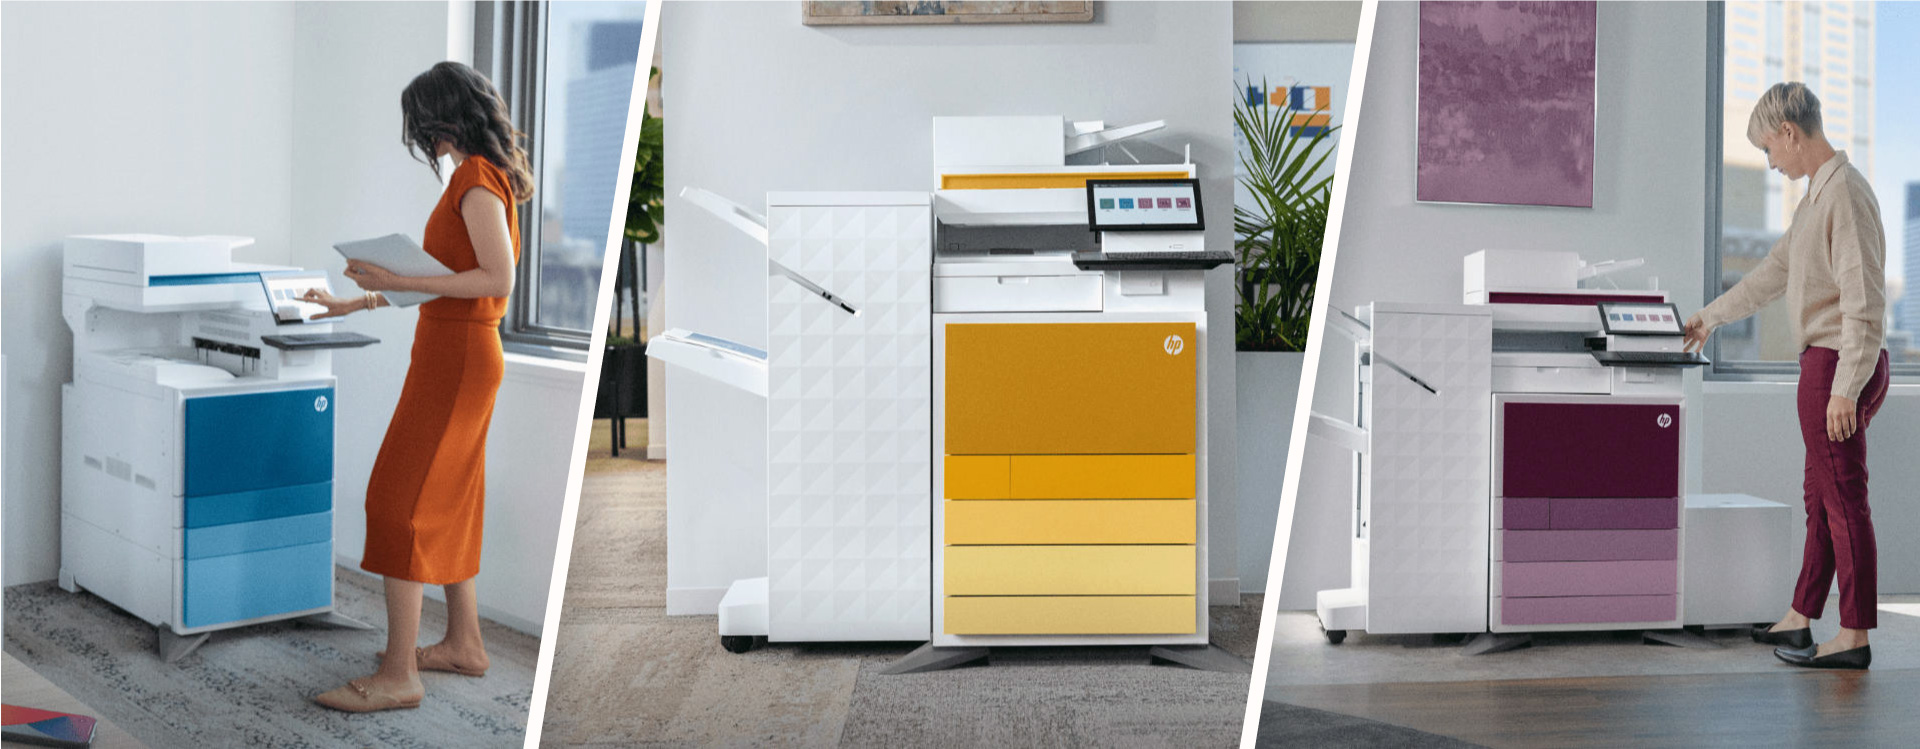 HP-intelligent-printers-triptych